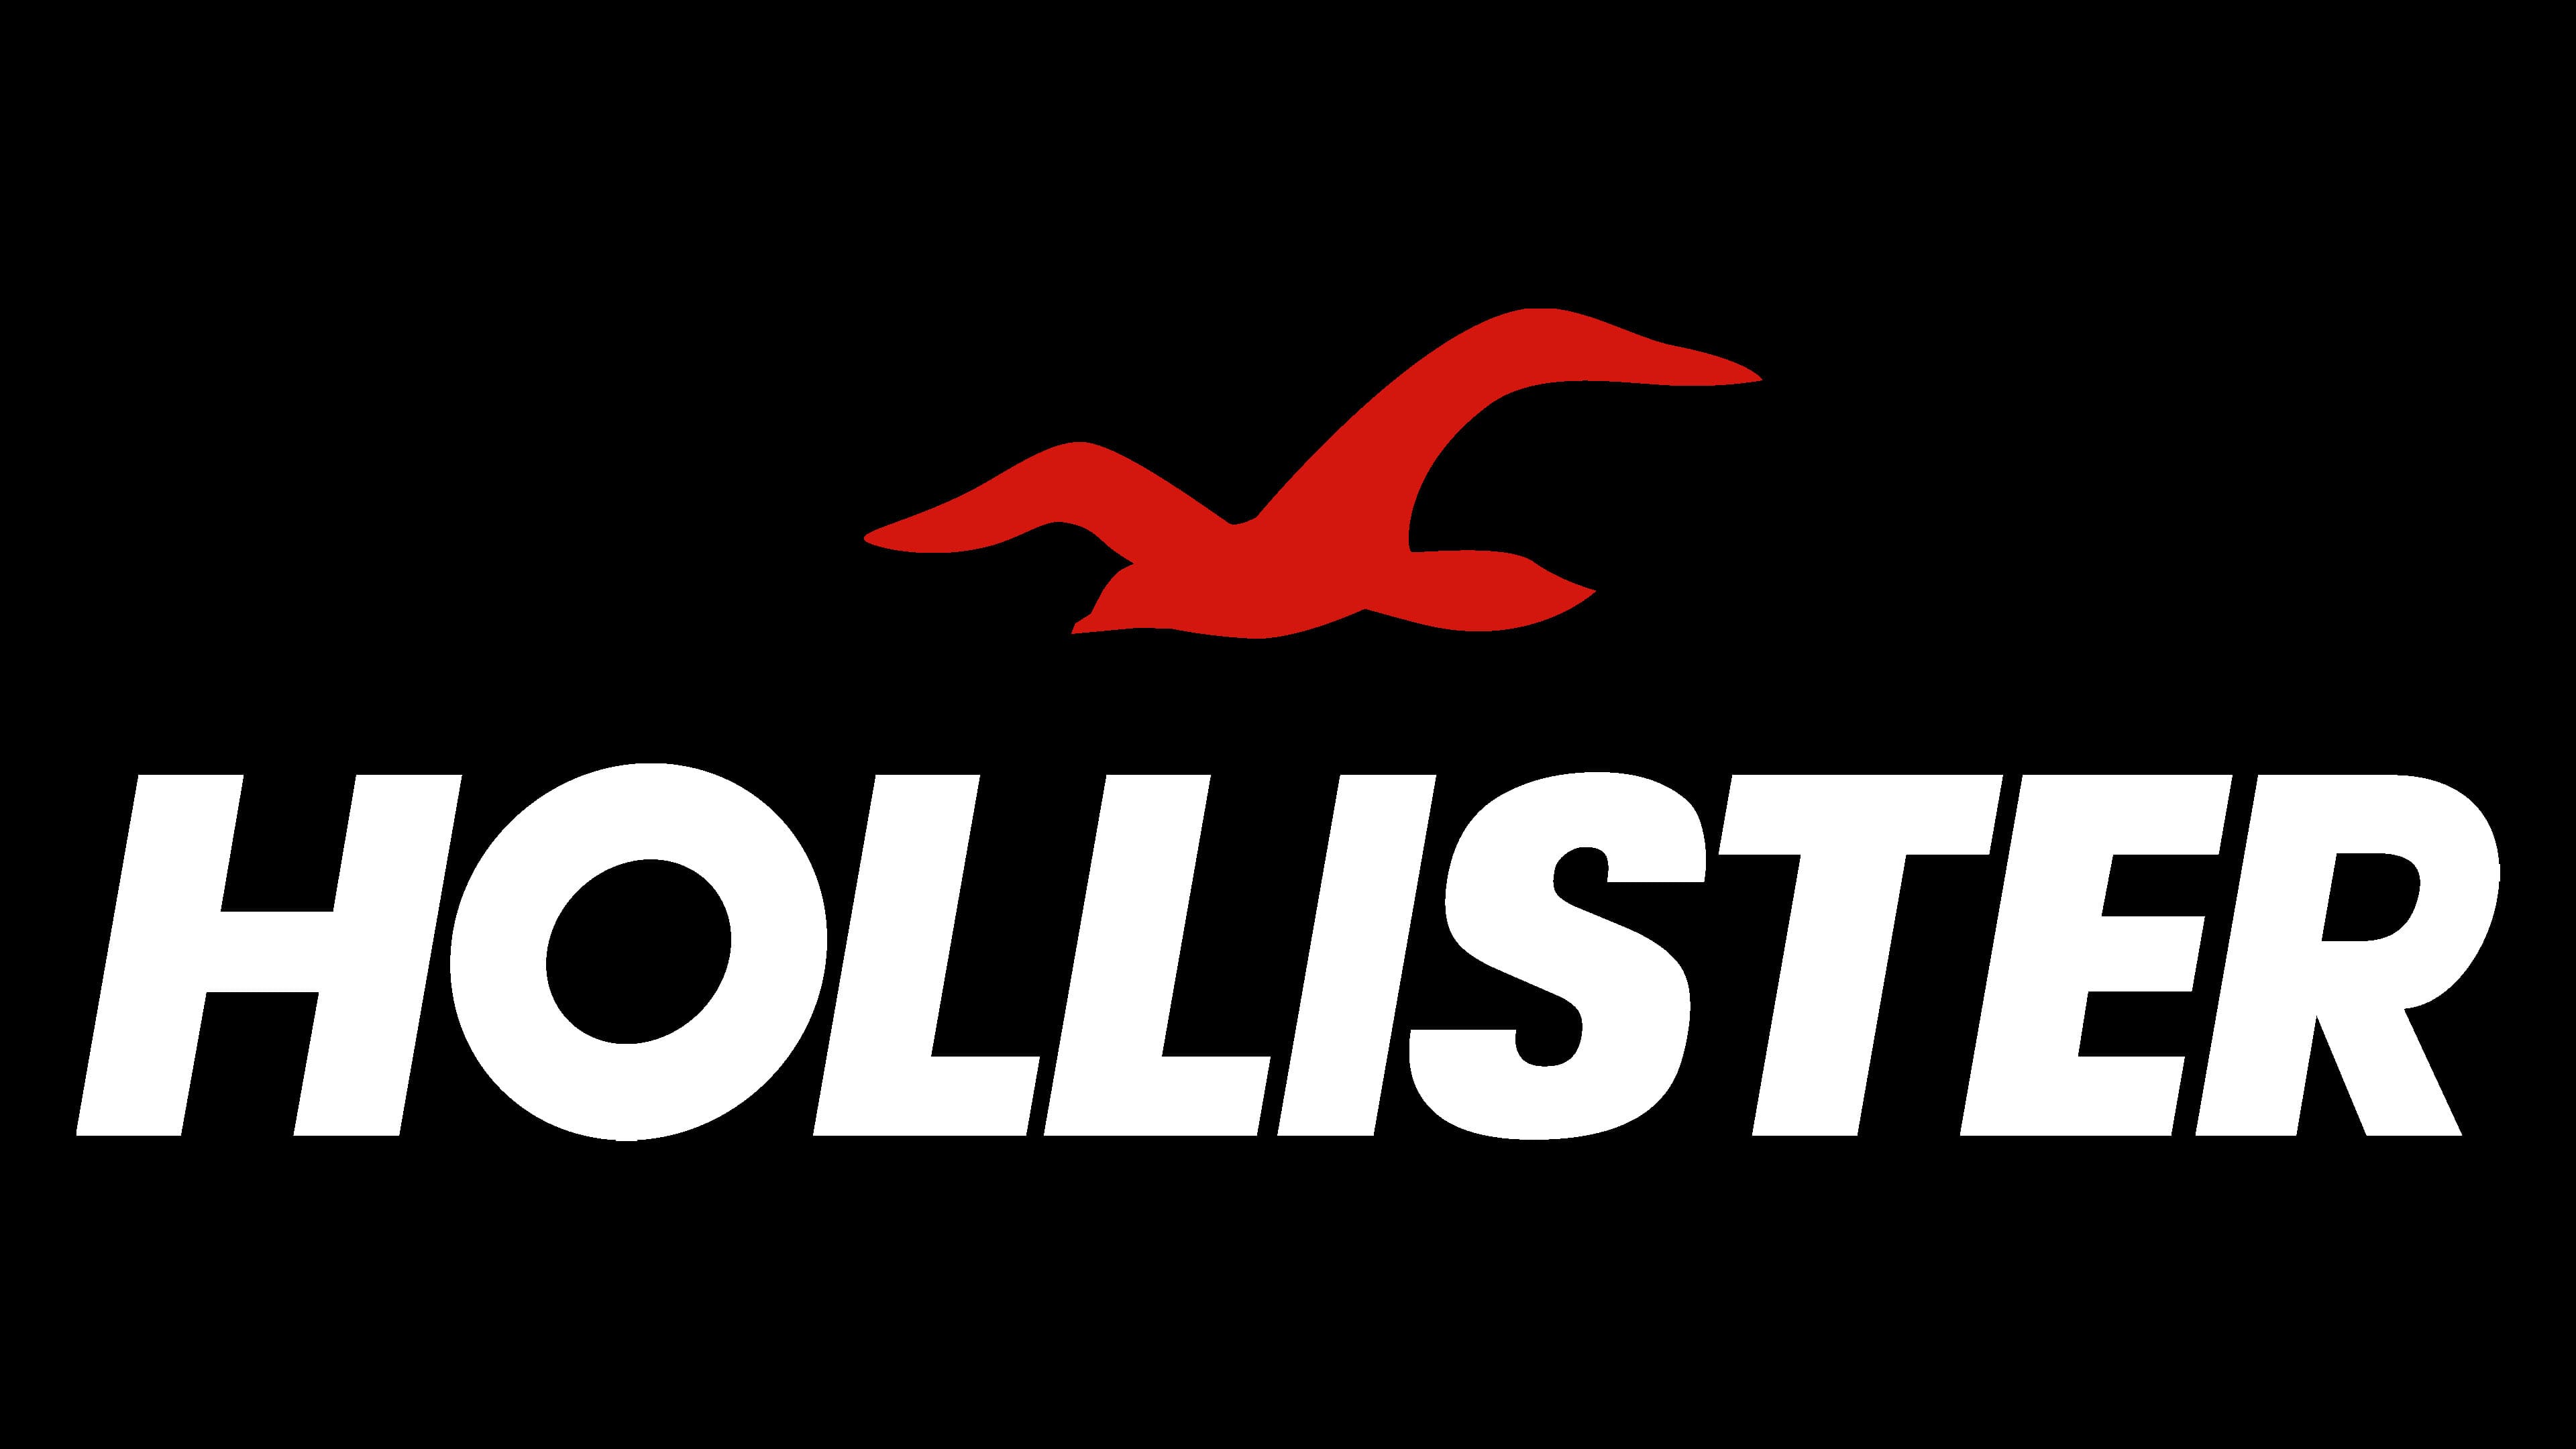 Simbolo Da Hollister | peacecommission.kdsg.gov.ng